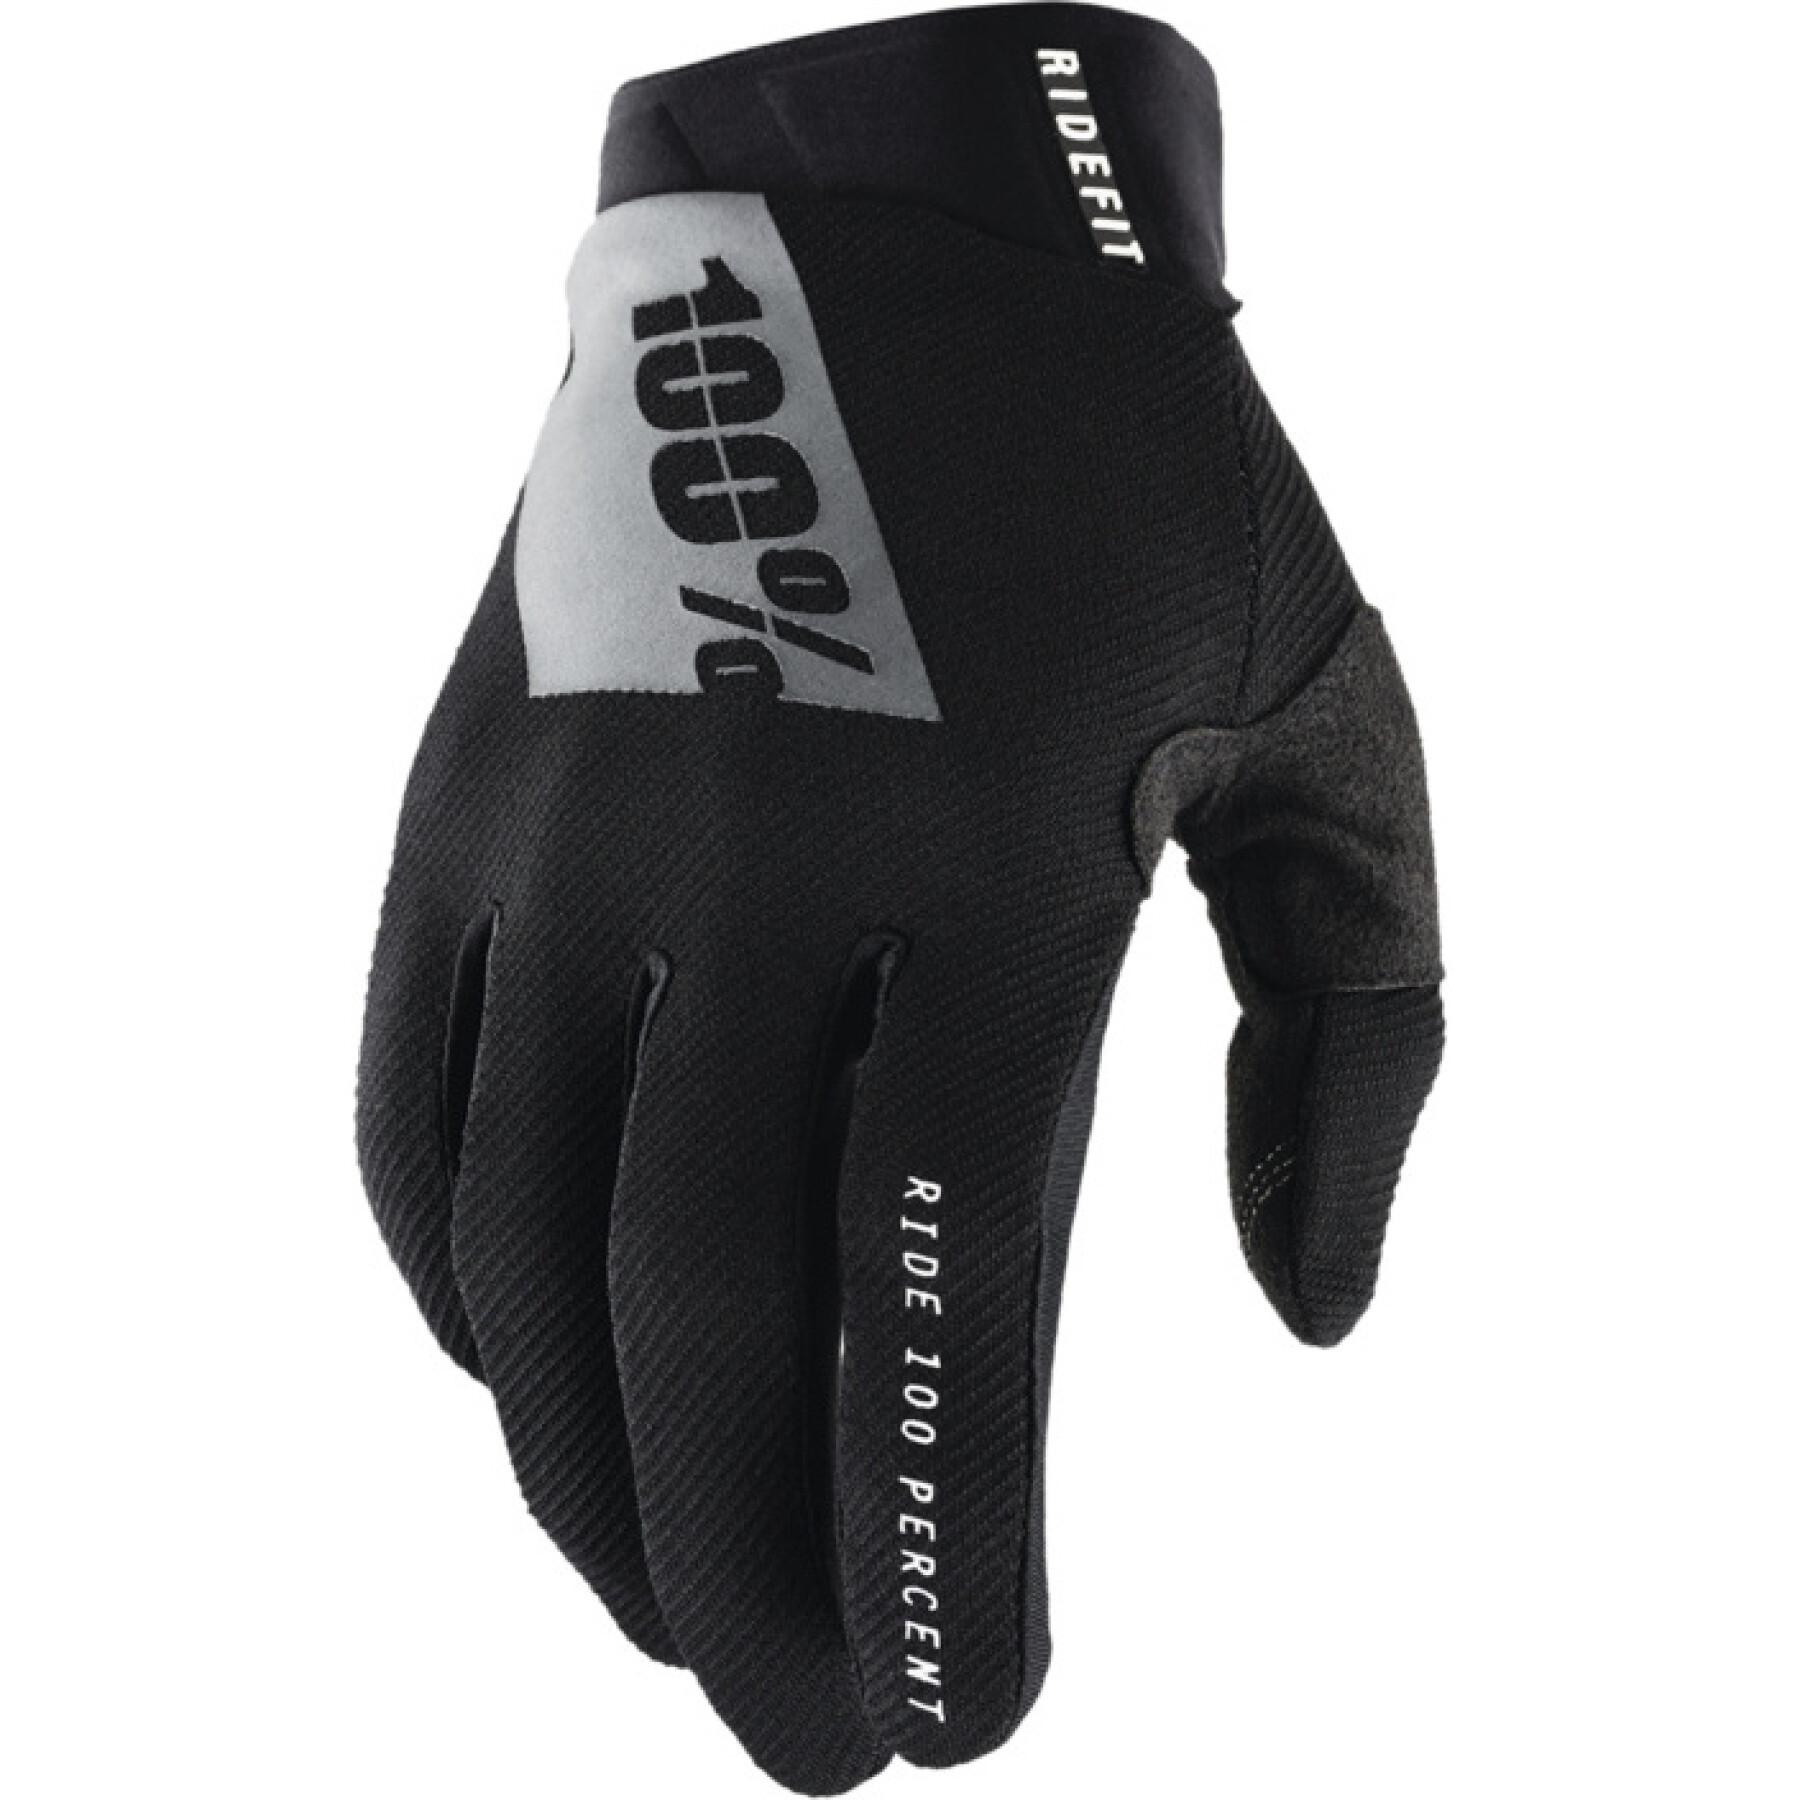 100% motorcycle cross gloves Ridefit